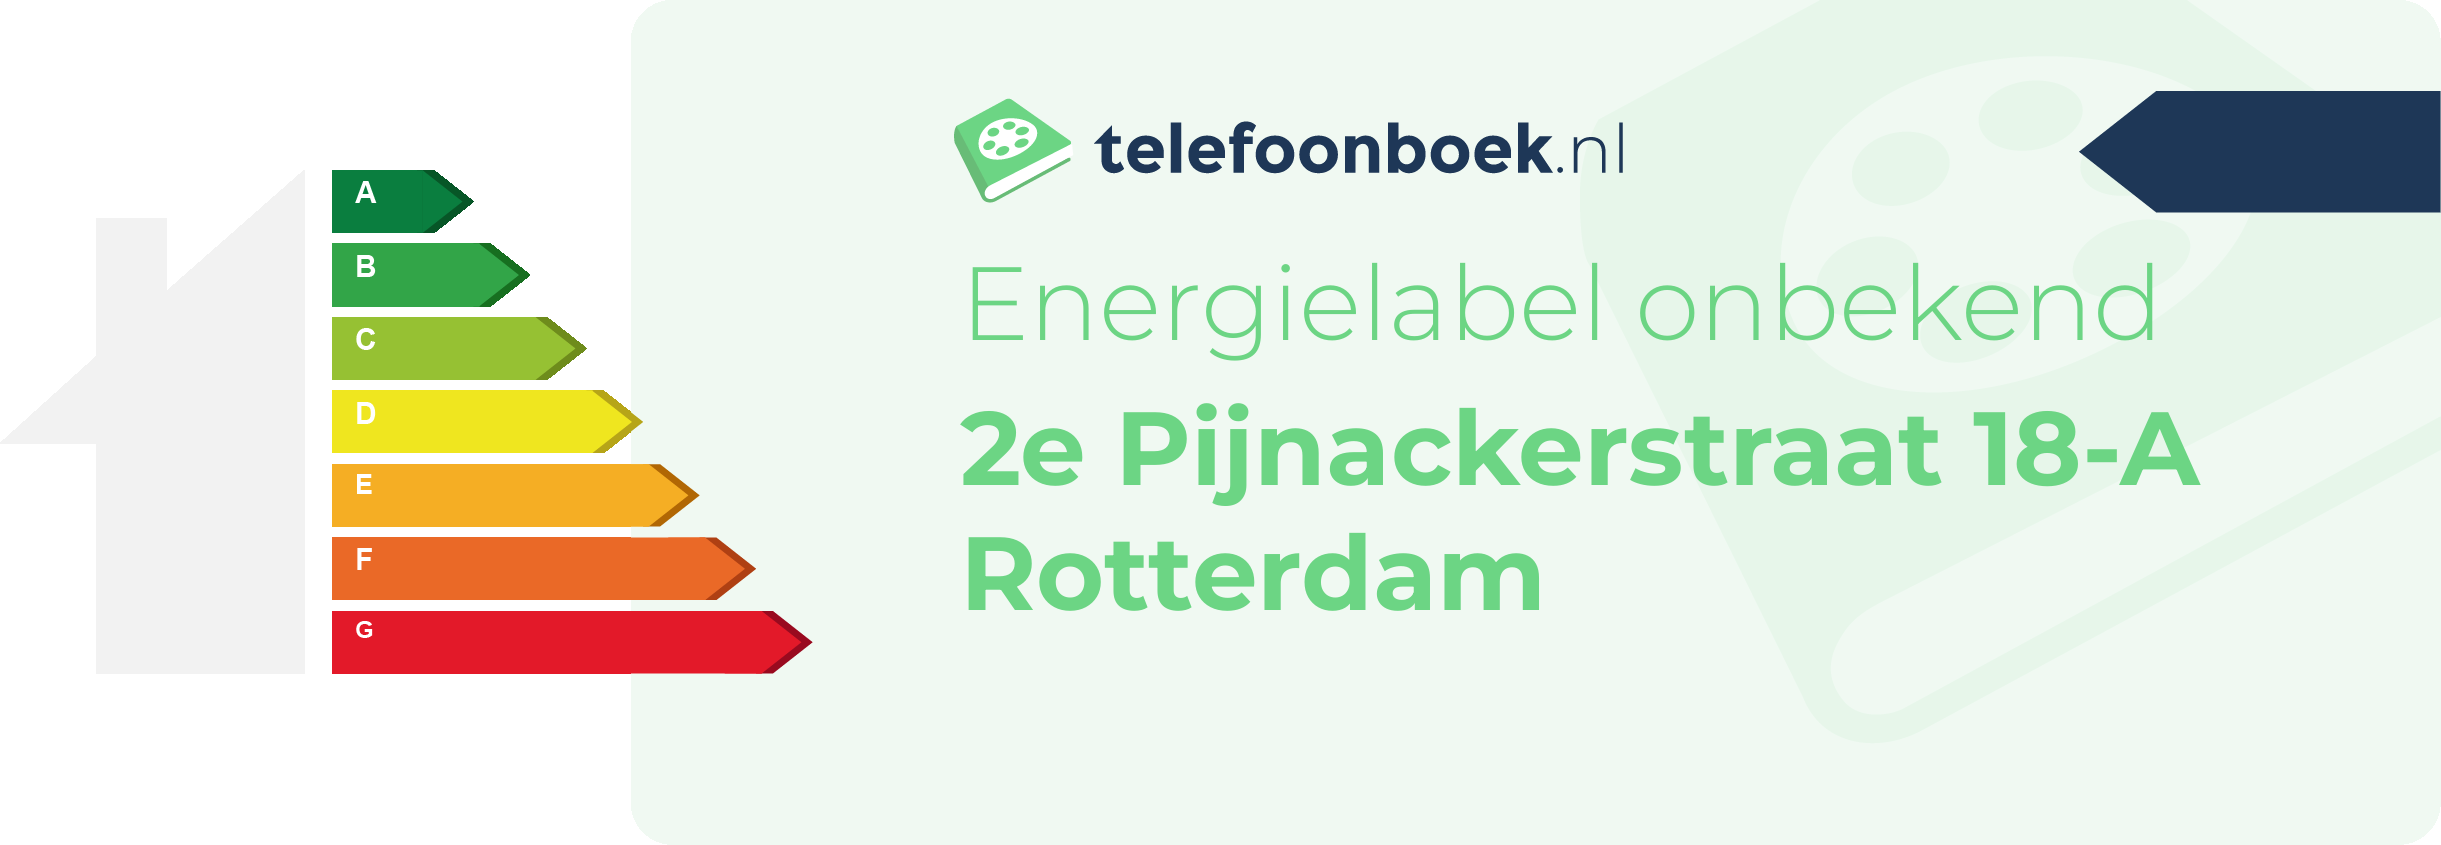 Energielabel 2e Pijnackerstraat 18-A Rotterdam